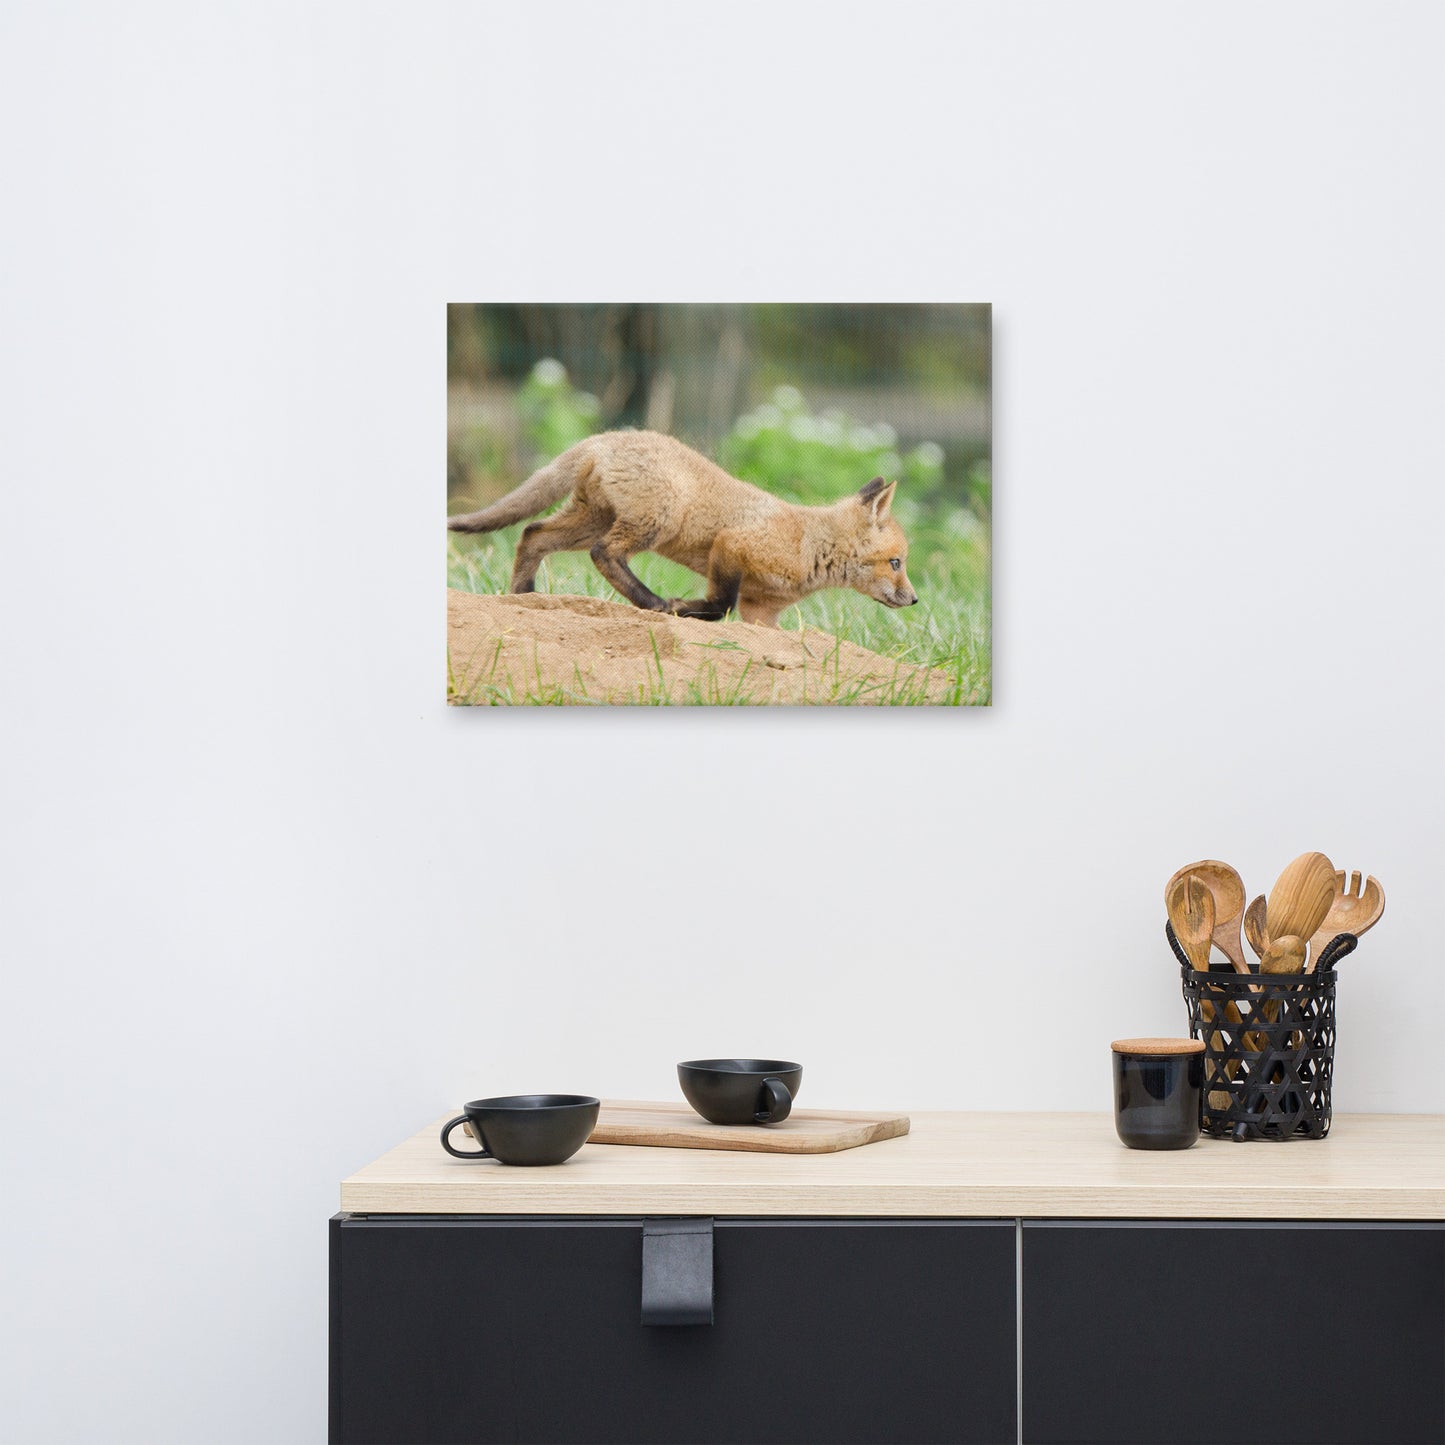 Woodland Nursery Animal Prints: Fox Pup In Meadow Animal / Wildlife / Nature Photograph Canvas Wall Art Print - Artwork - Wall Decor